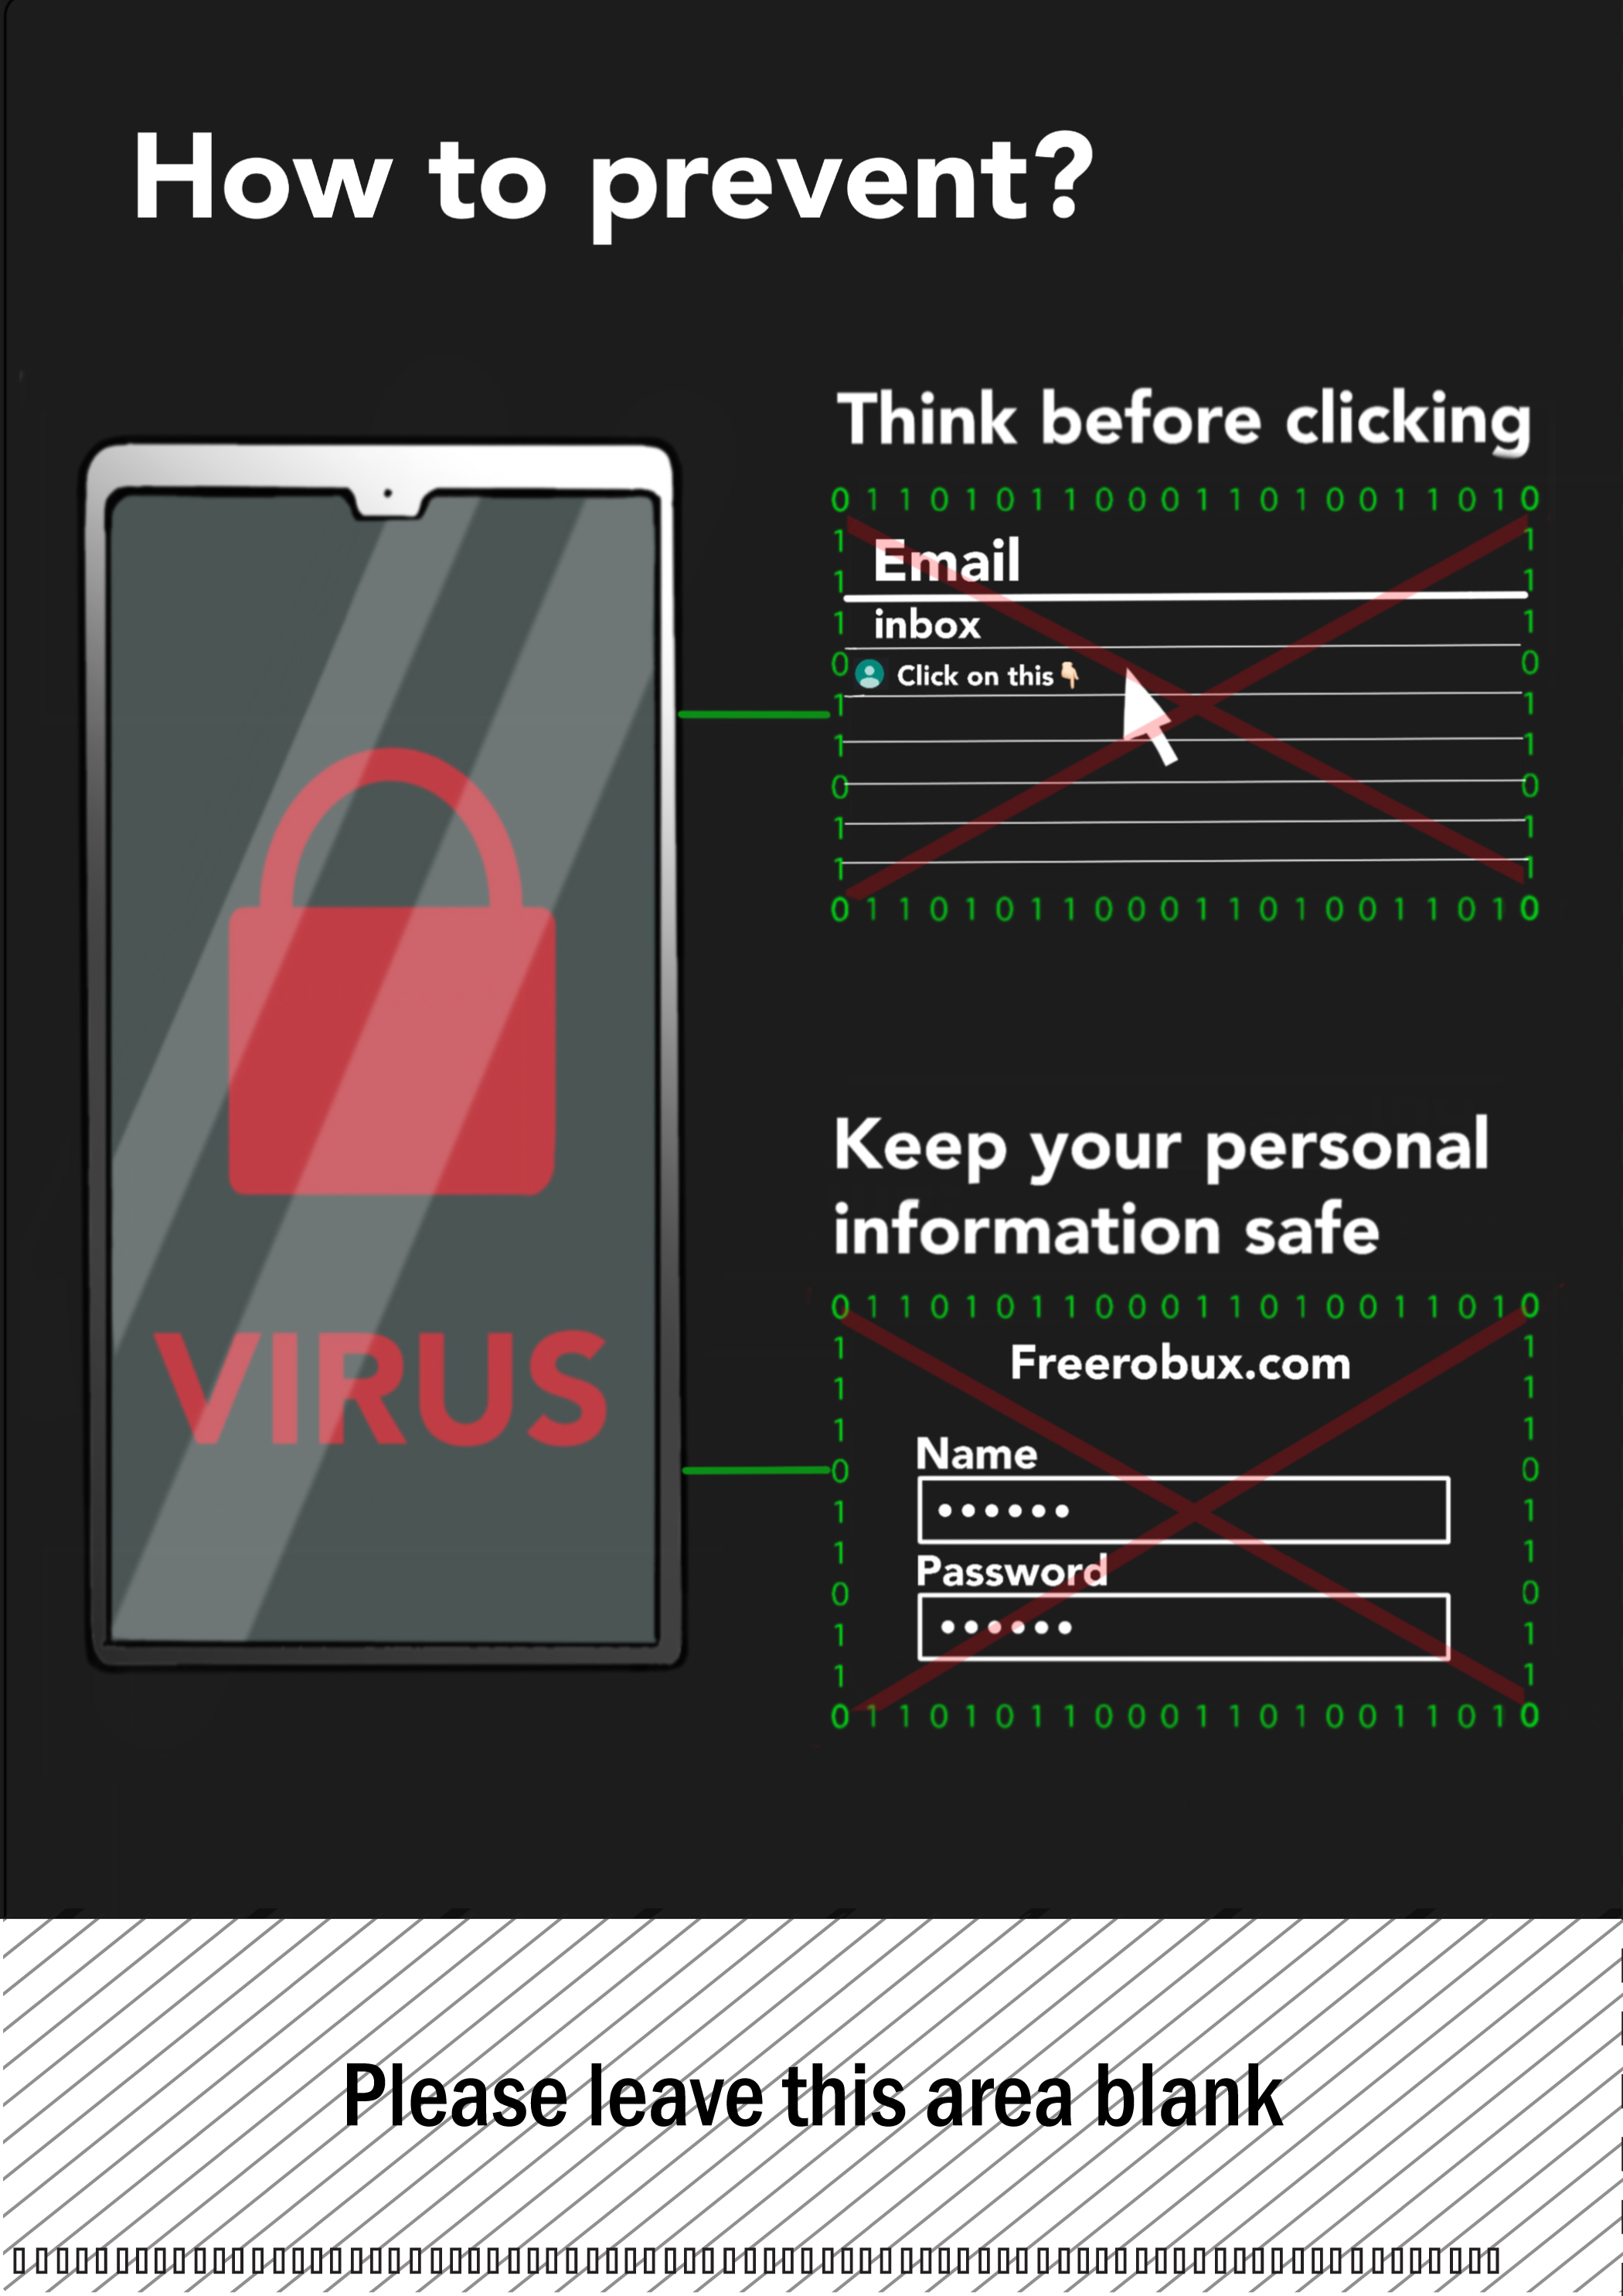 Entry #4 - My phone has a virus!